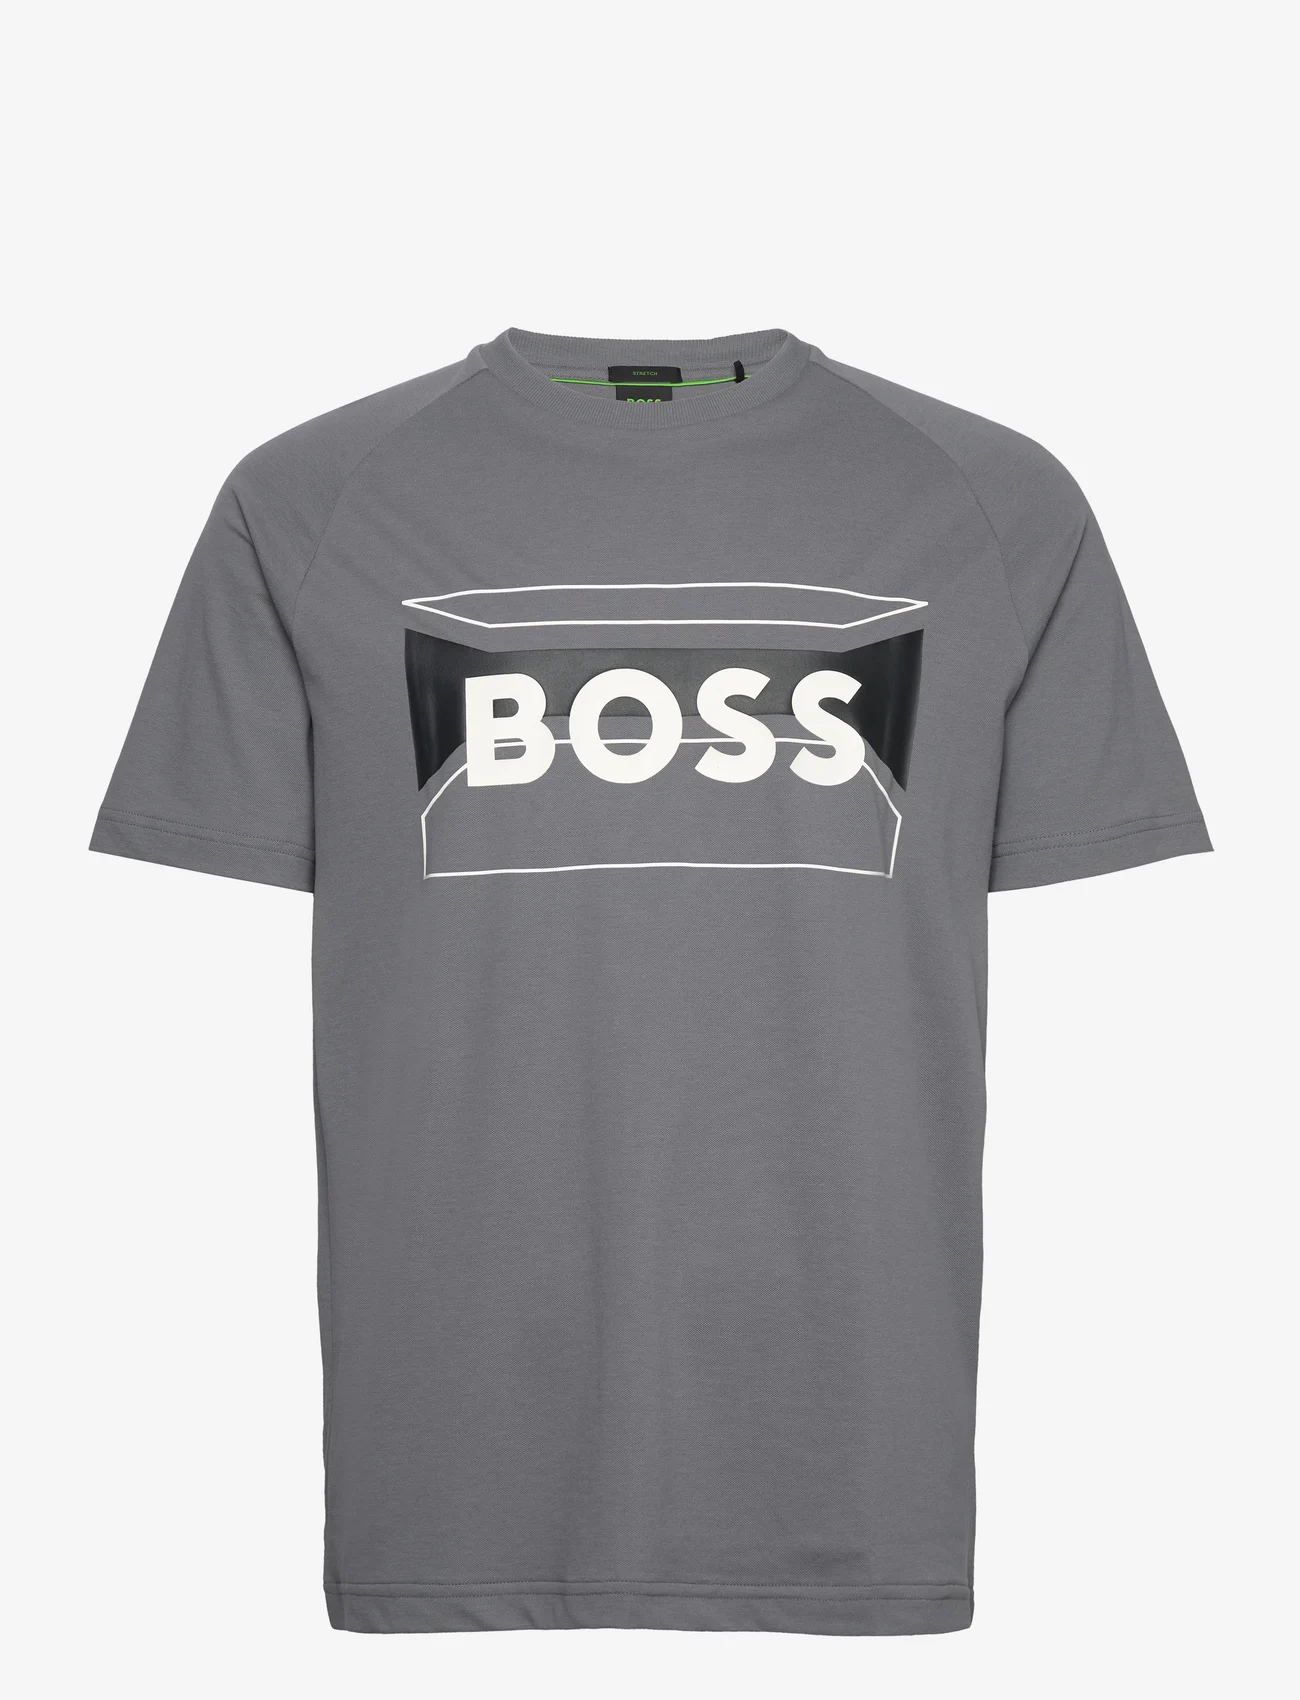 BOSS - Tee 2 - t-shirts - medium grey - 0